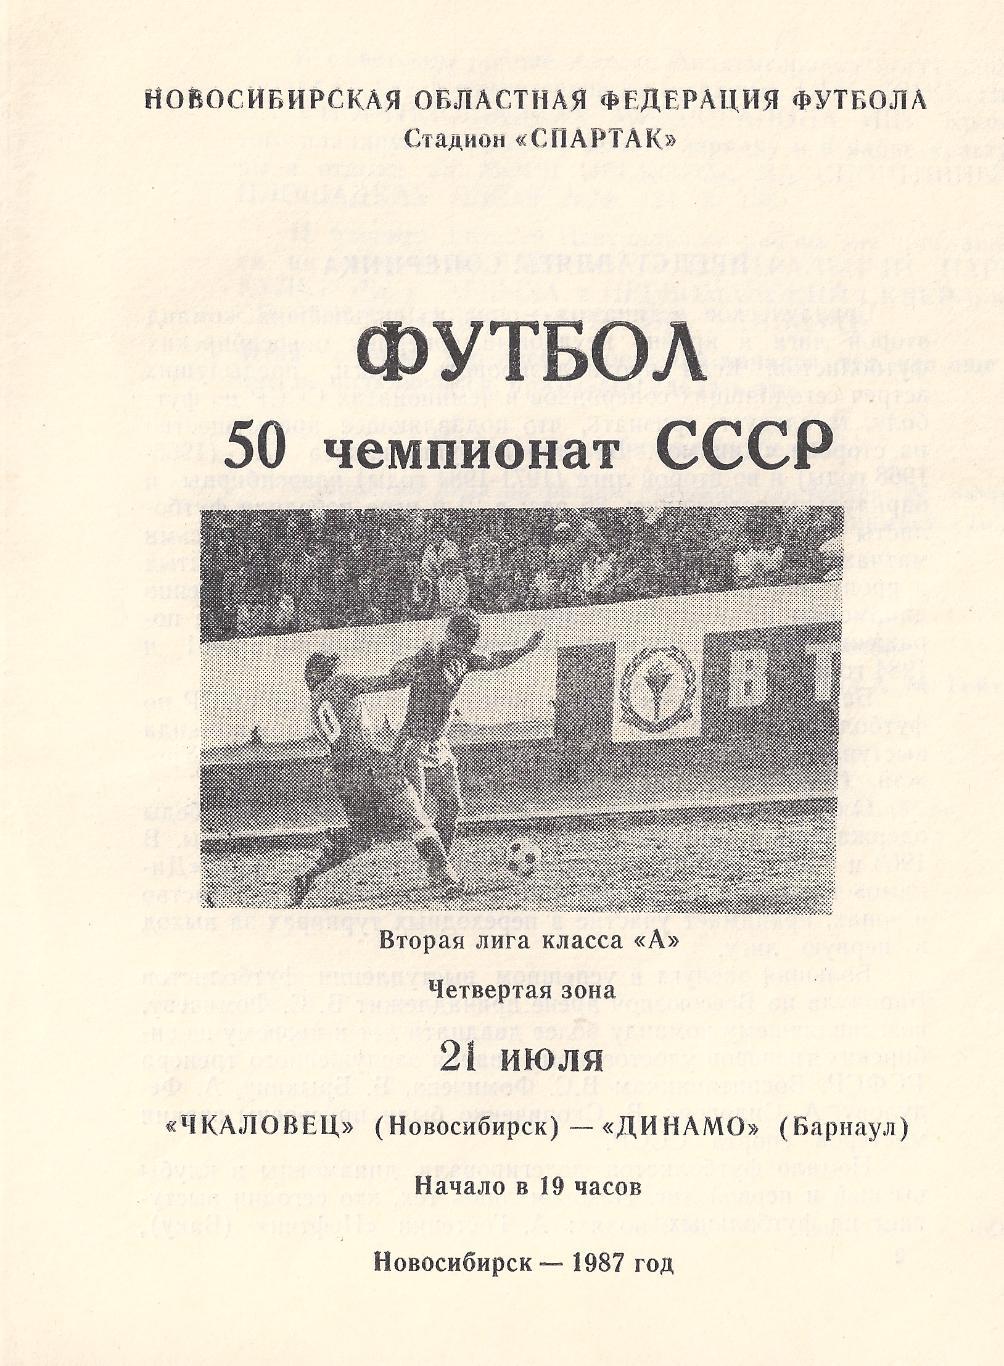 1987 - Чкаловец Новосибирск - Динамо Барнаул